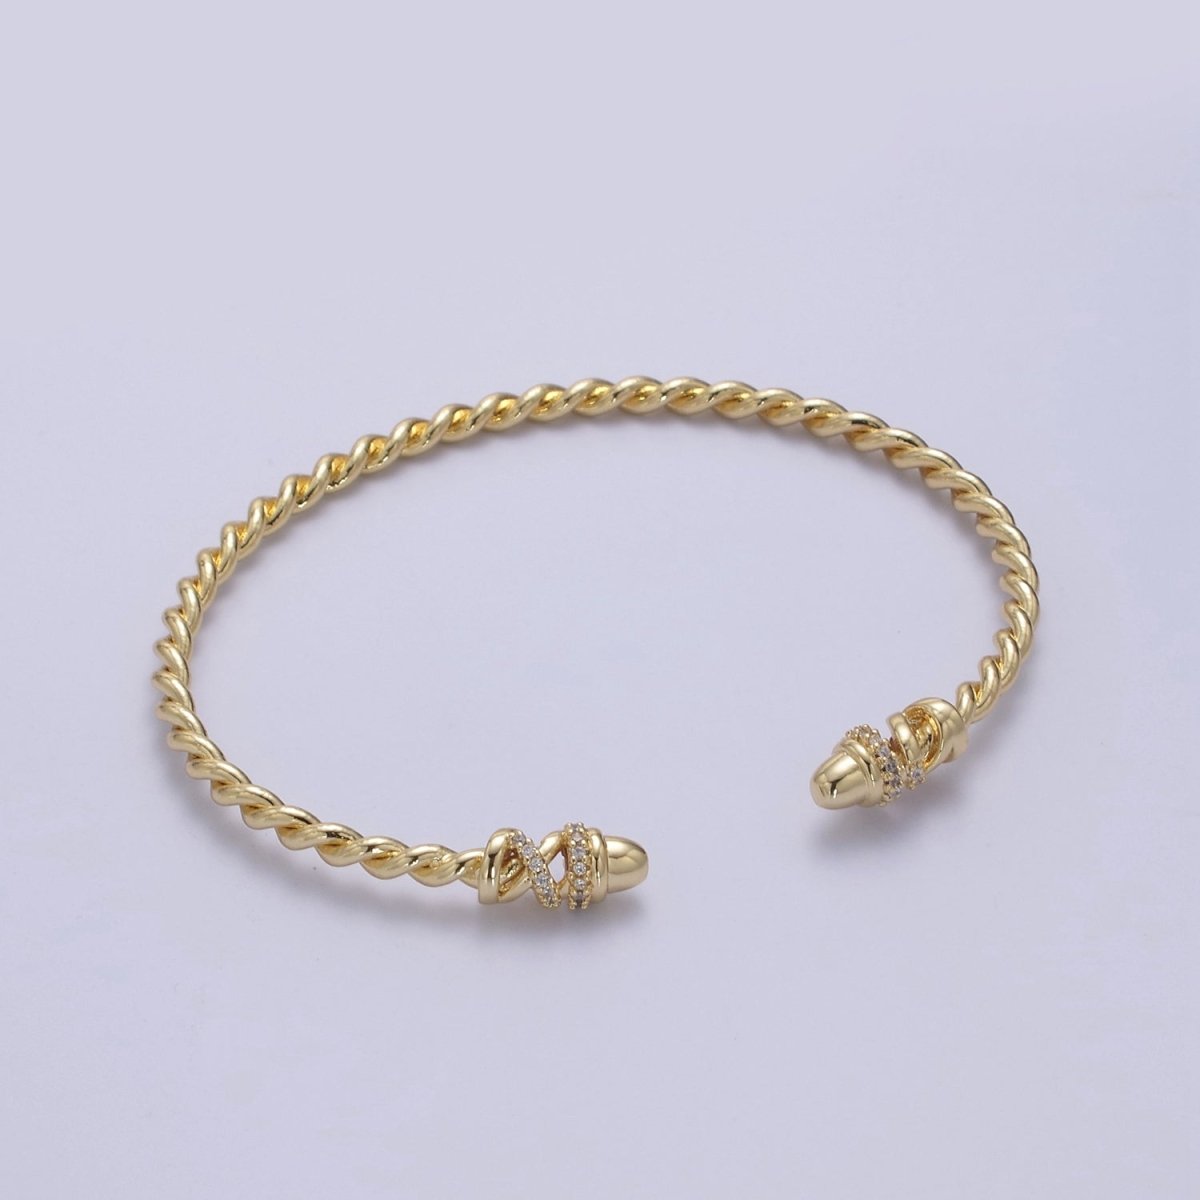 Adjustable Gold Twisted Rope Bracelet Dainty Silver Cuff Bangle, Braided Bracelet, Stacking Bracelet | WA-694 WA-695 Clearance Pricing - DLUXCA